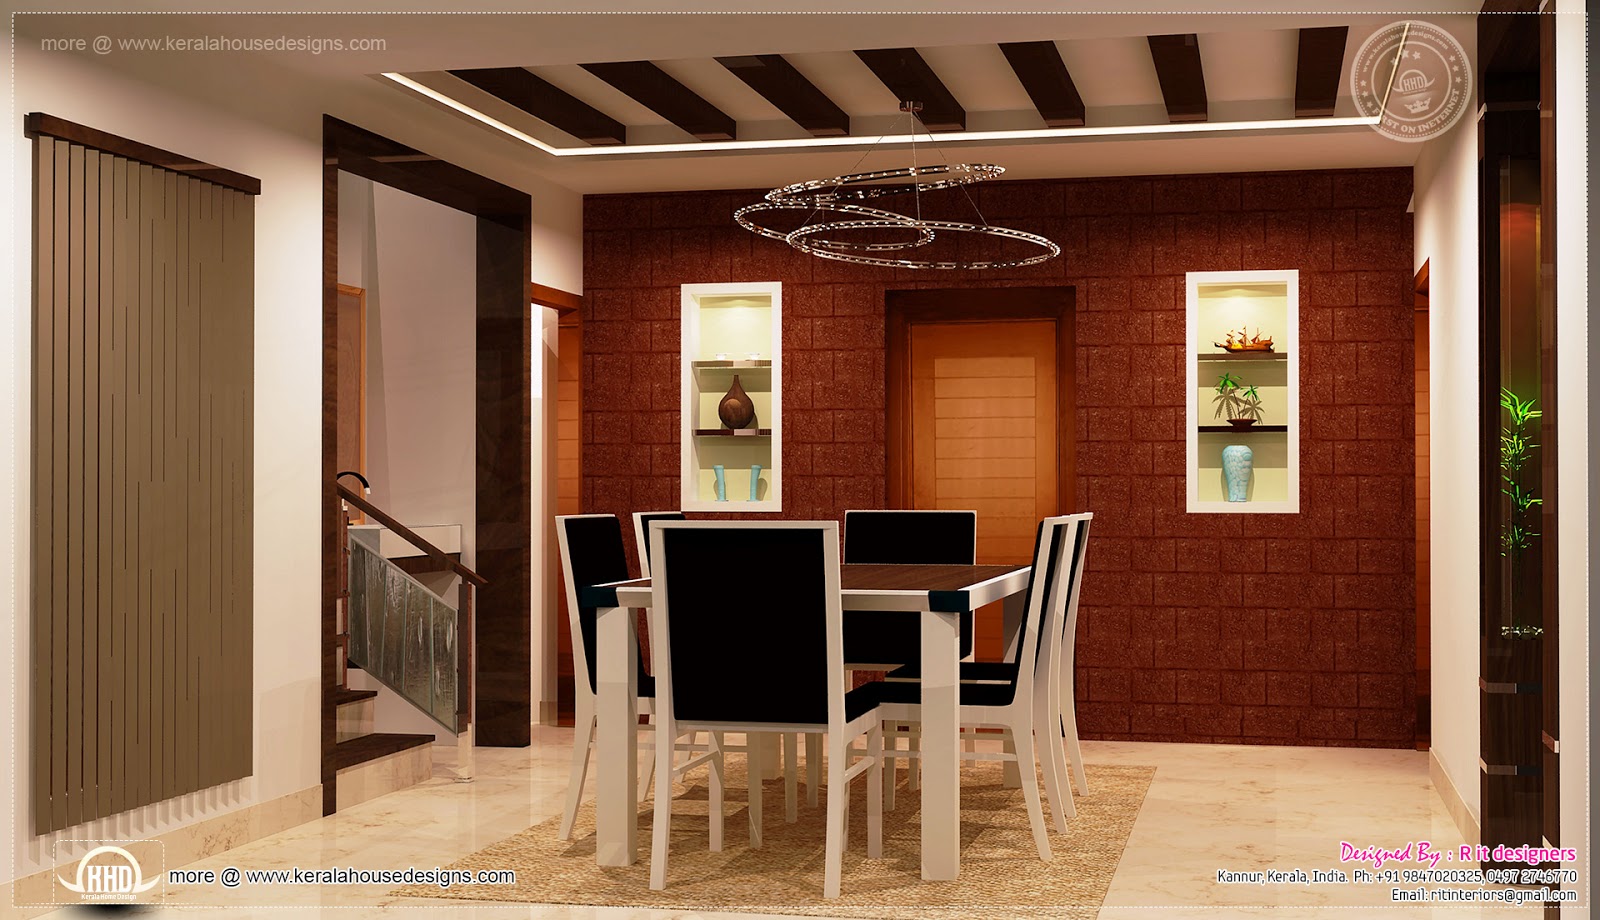 Home interior designs by Rit designers - Kerala home ...